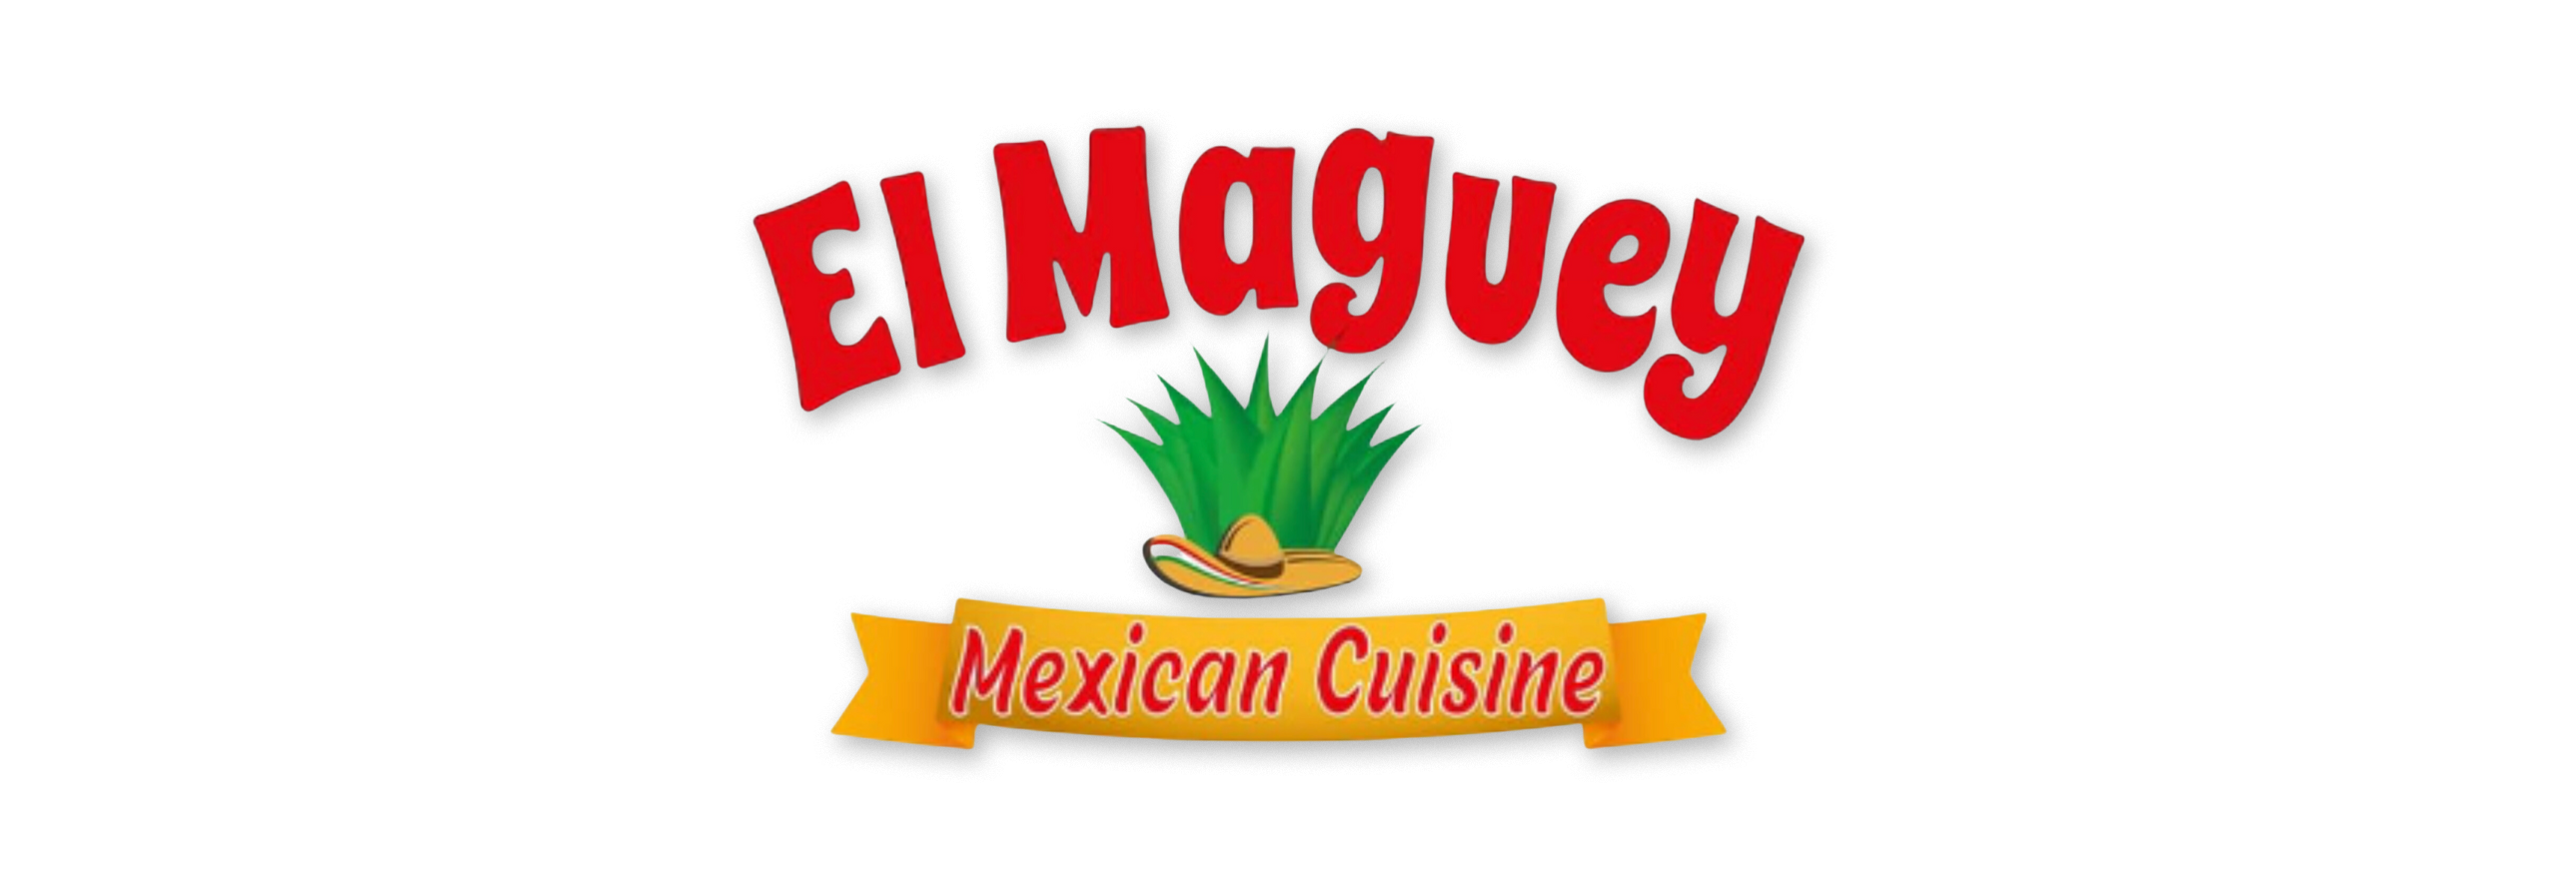 El Maguey Mexican Cuisine